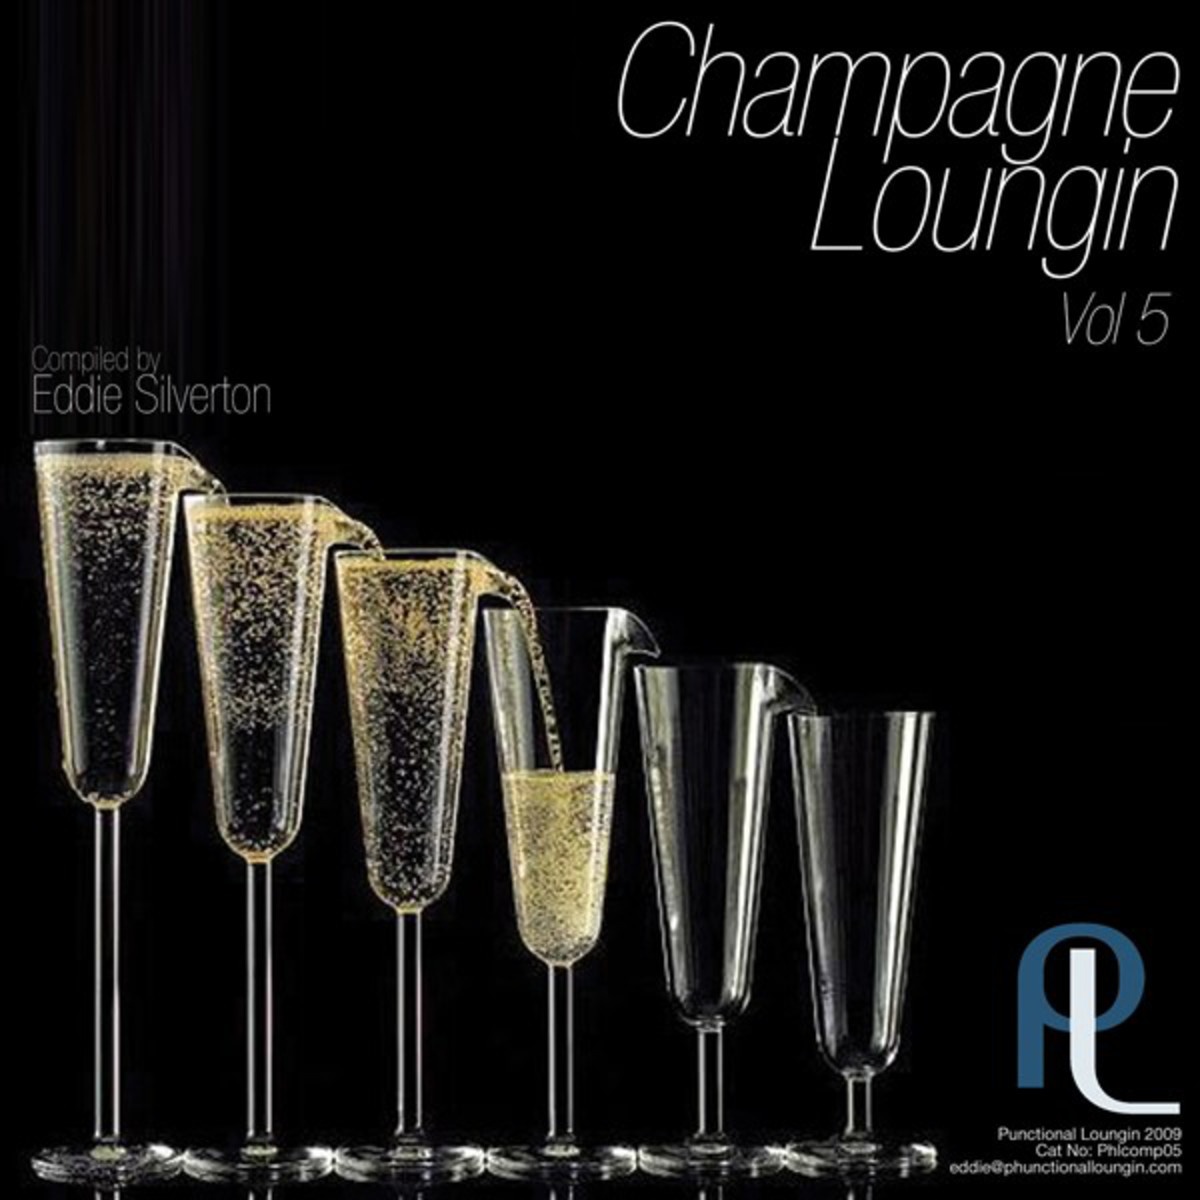 Champagne Loungin Volume 5